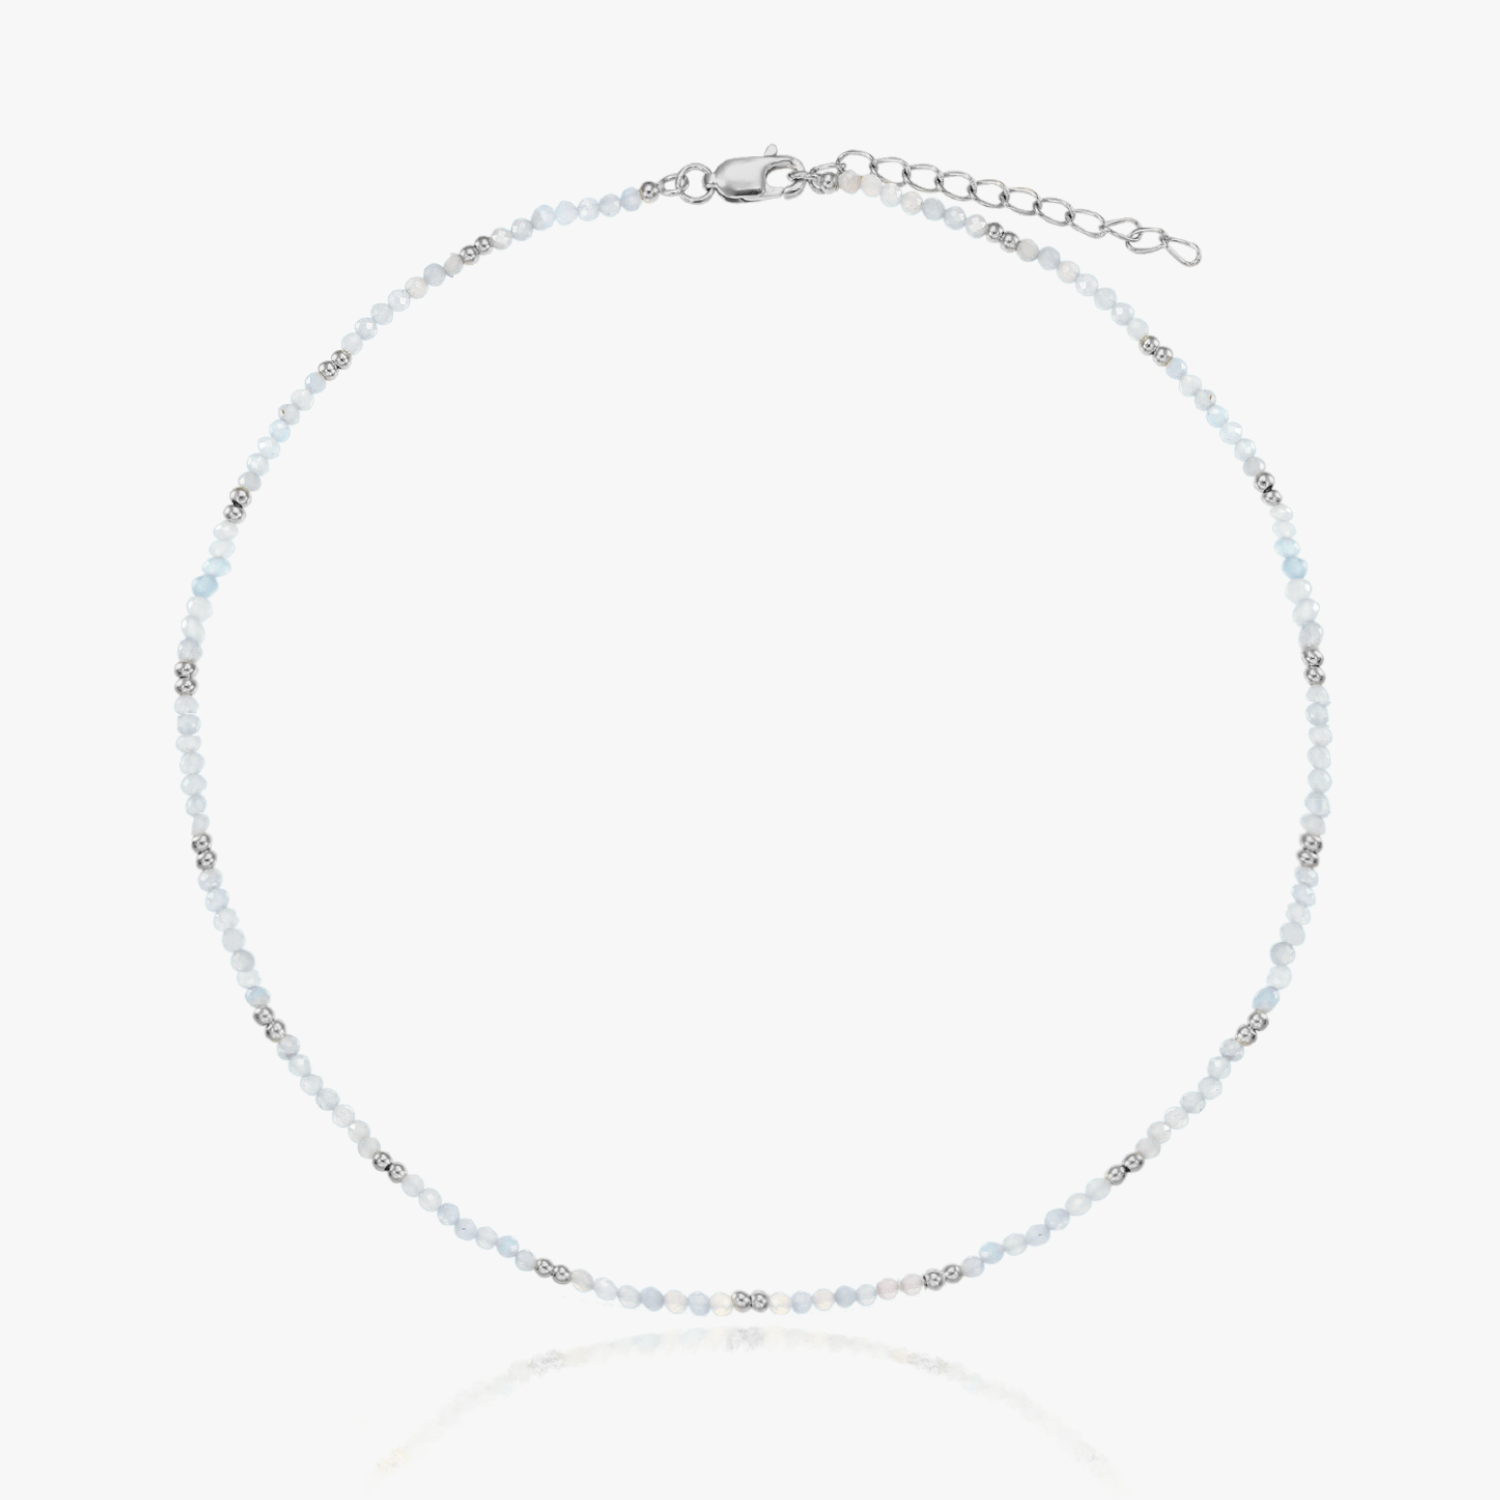 Golden SummerScape silver necklace – Moonstone